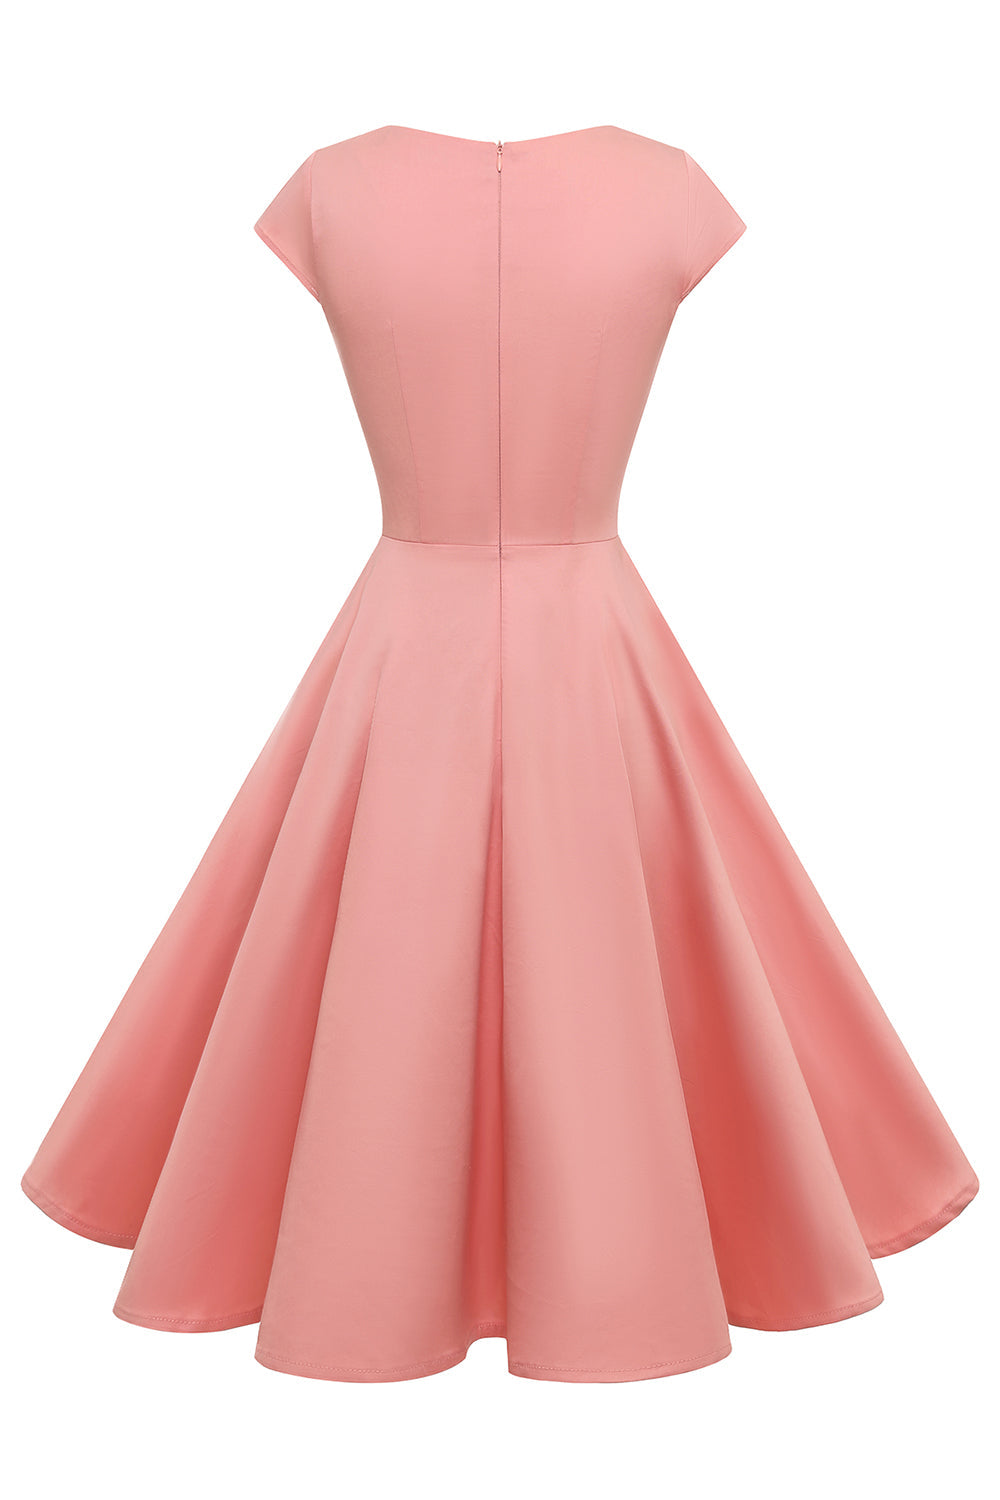 Retro Style Sweetheart 1950s Dress